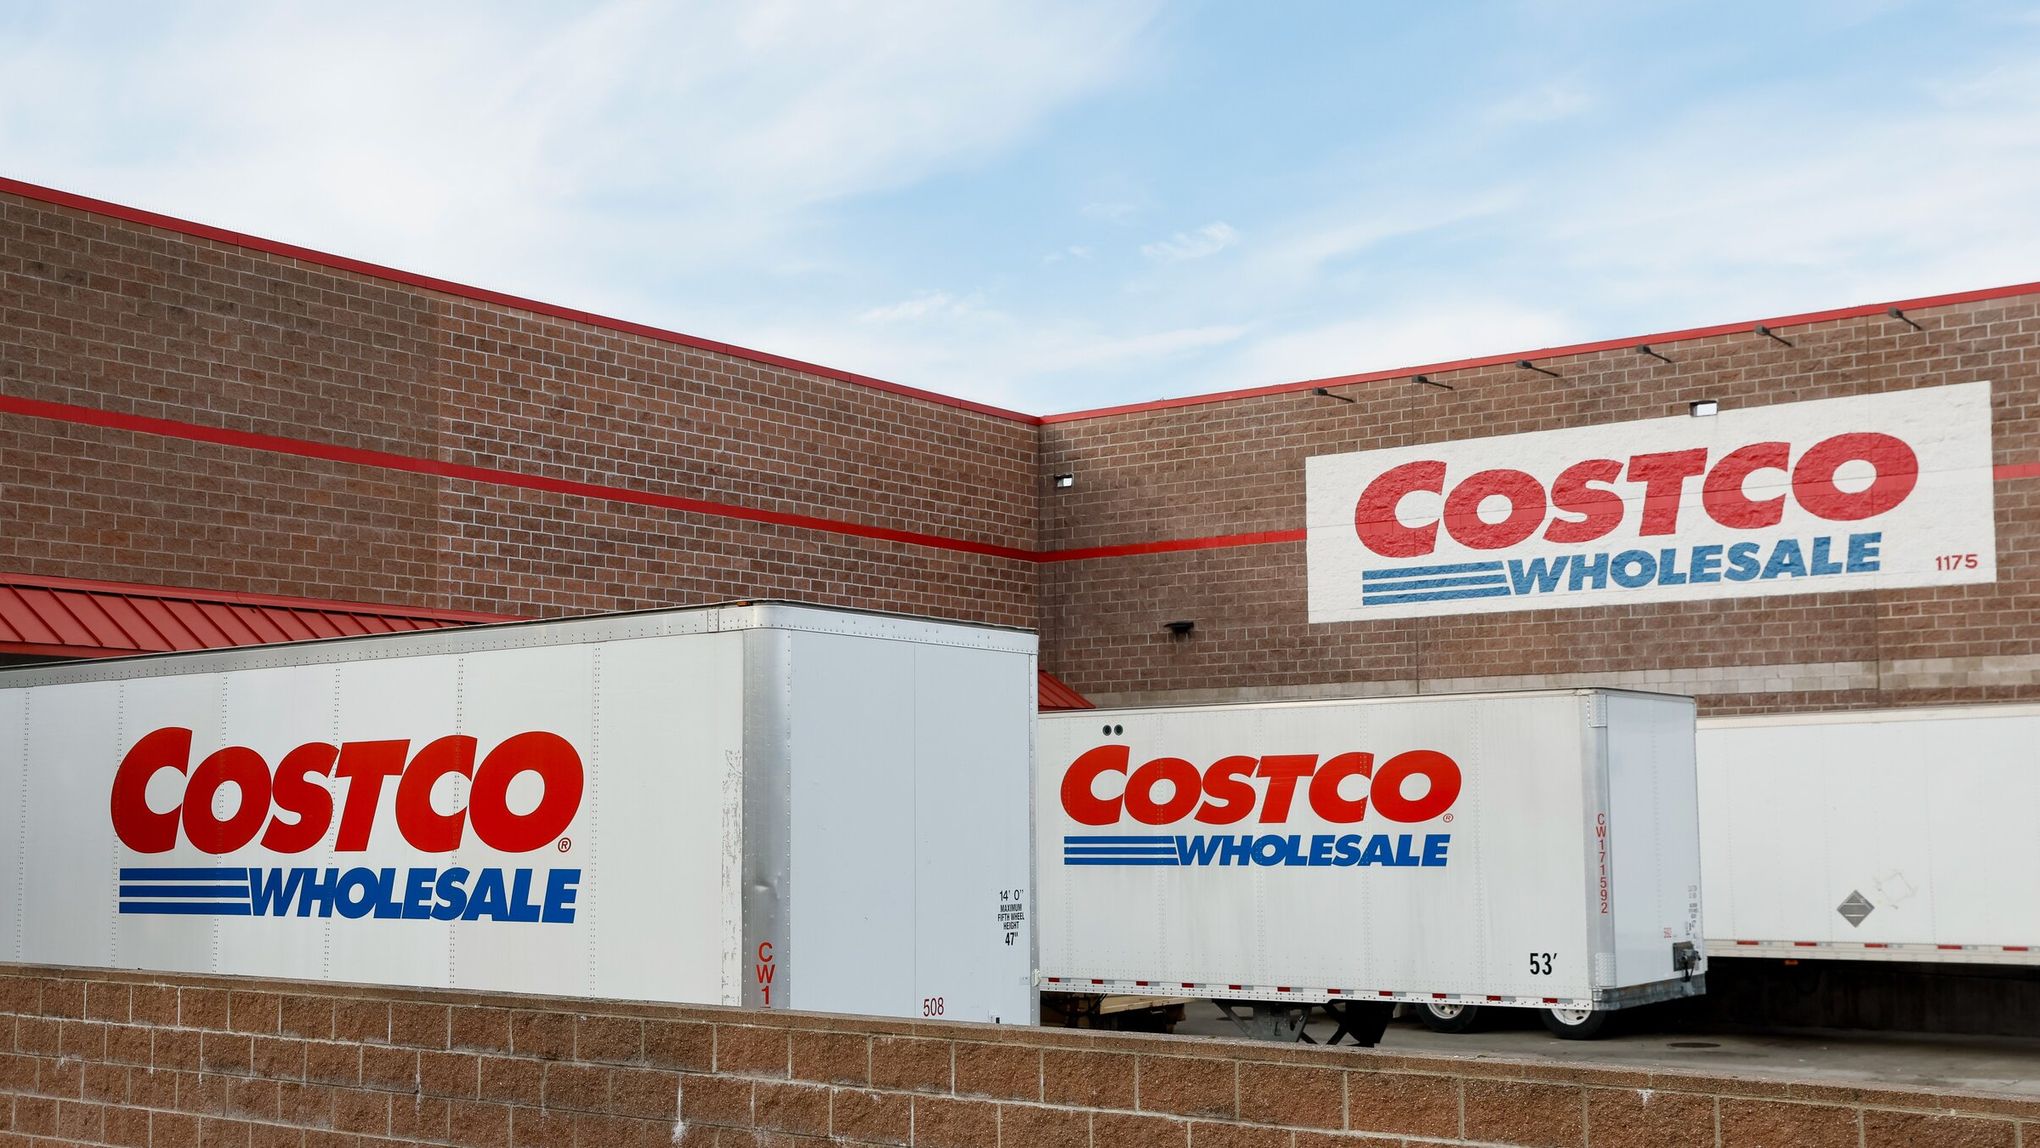 Costco - Warehouse or Wholesale Store